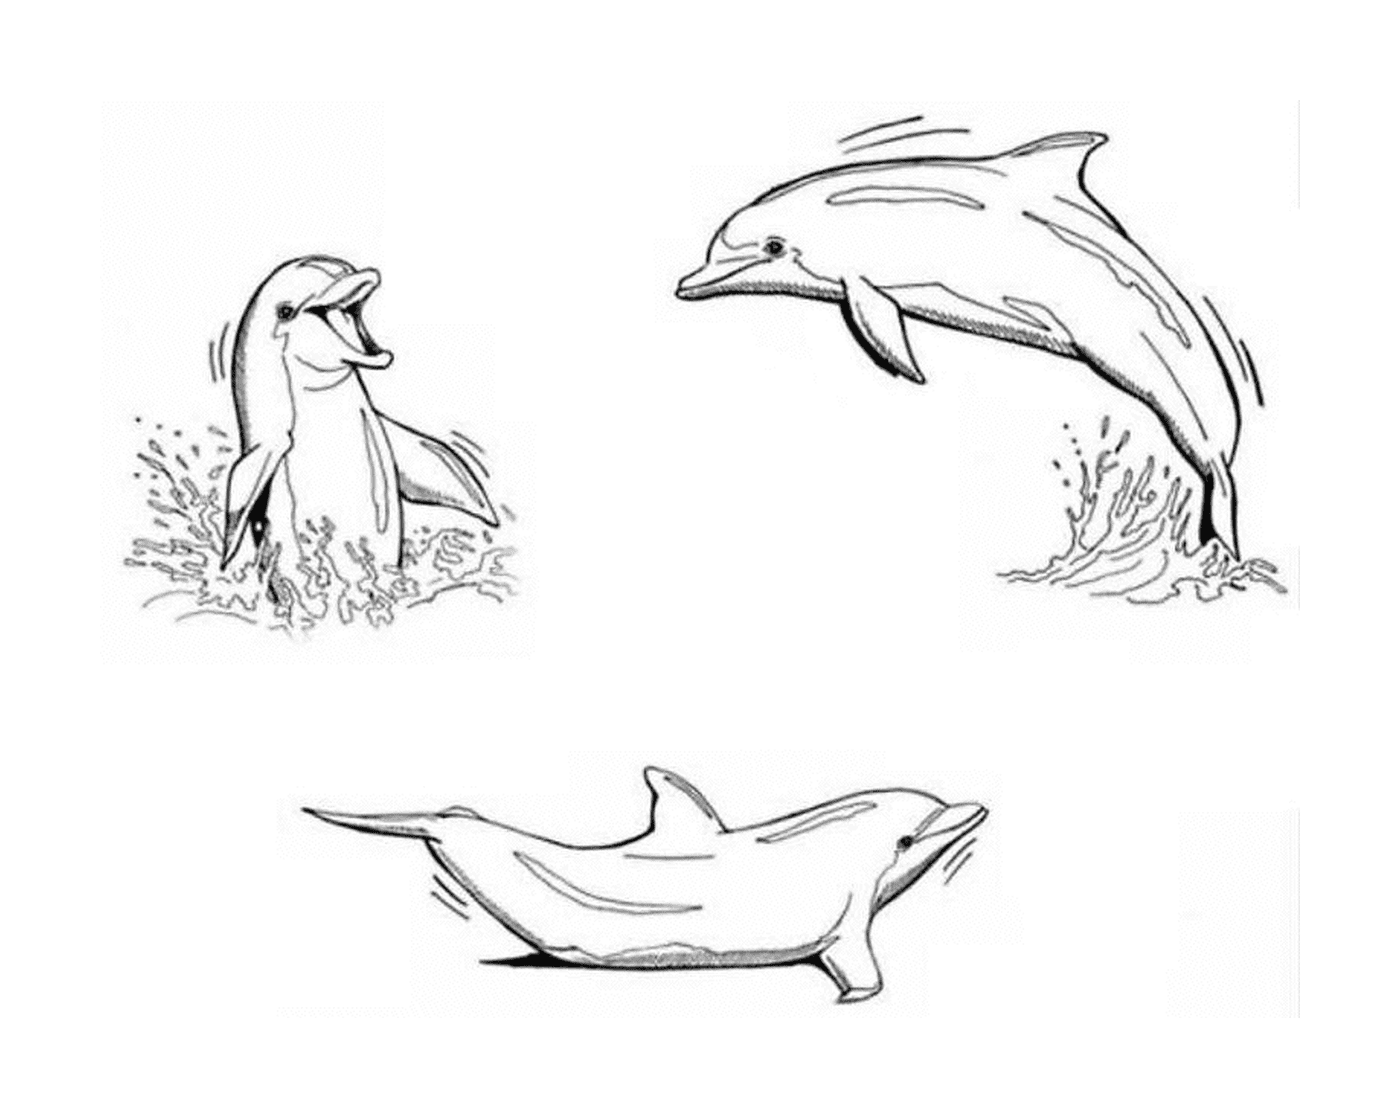  Три дельфина делают раунд 